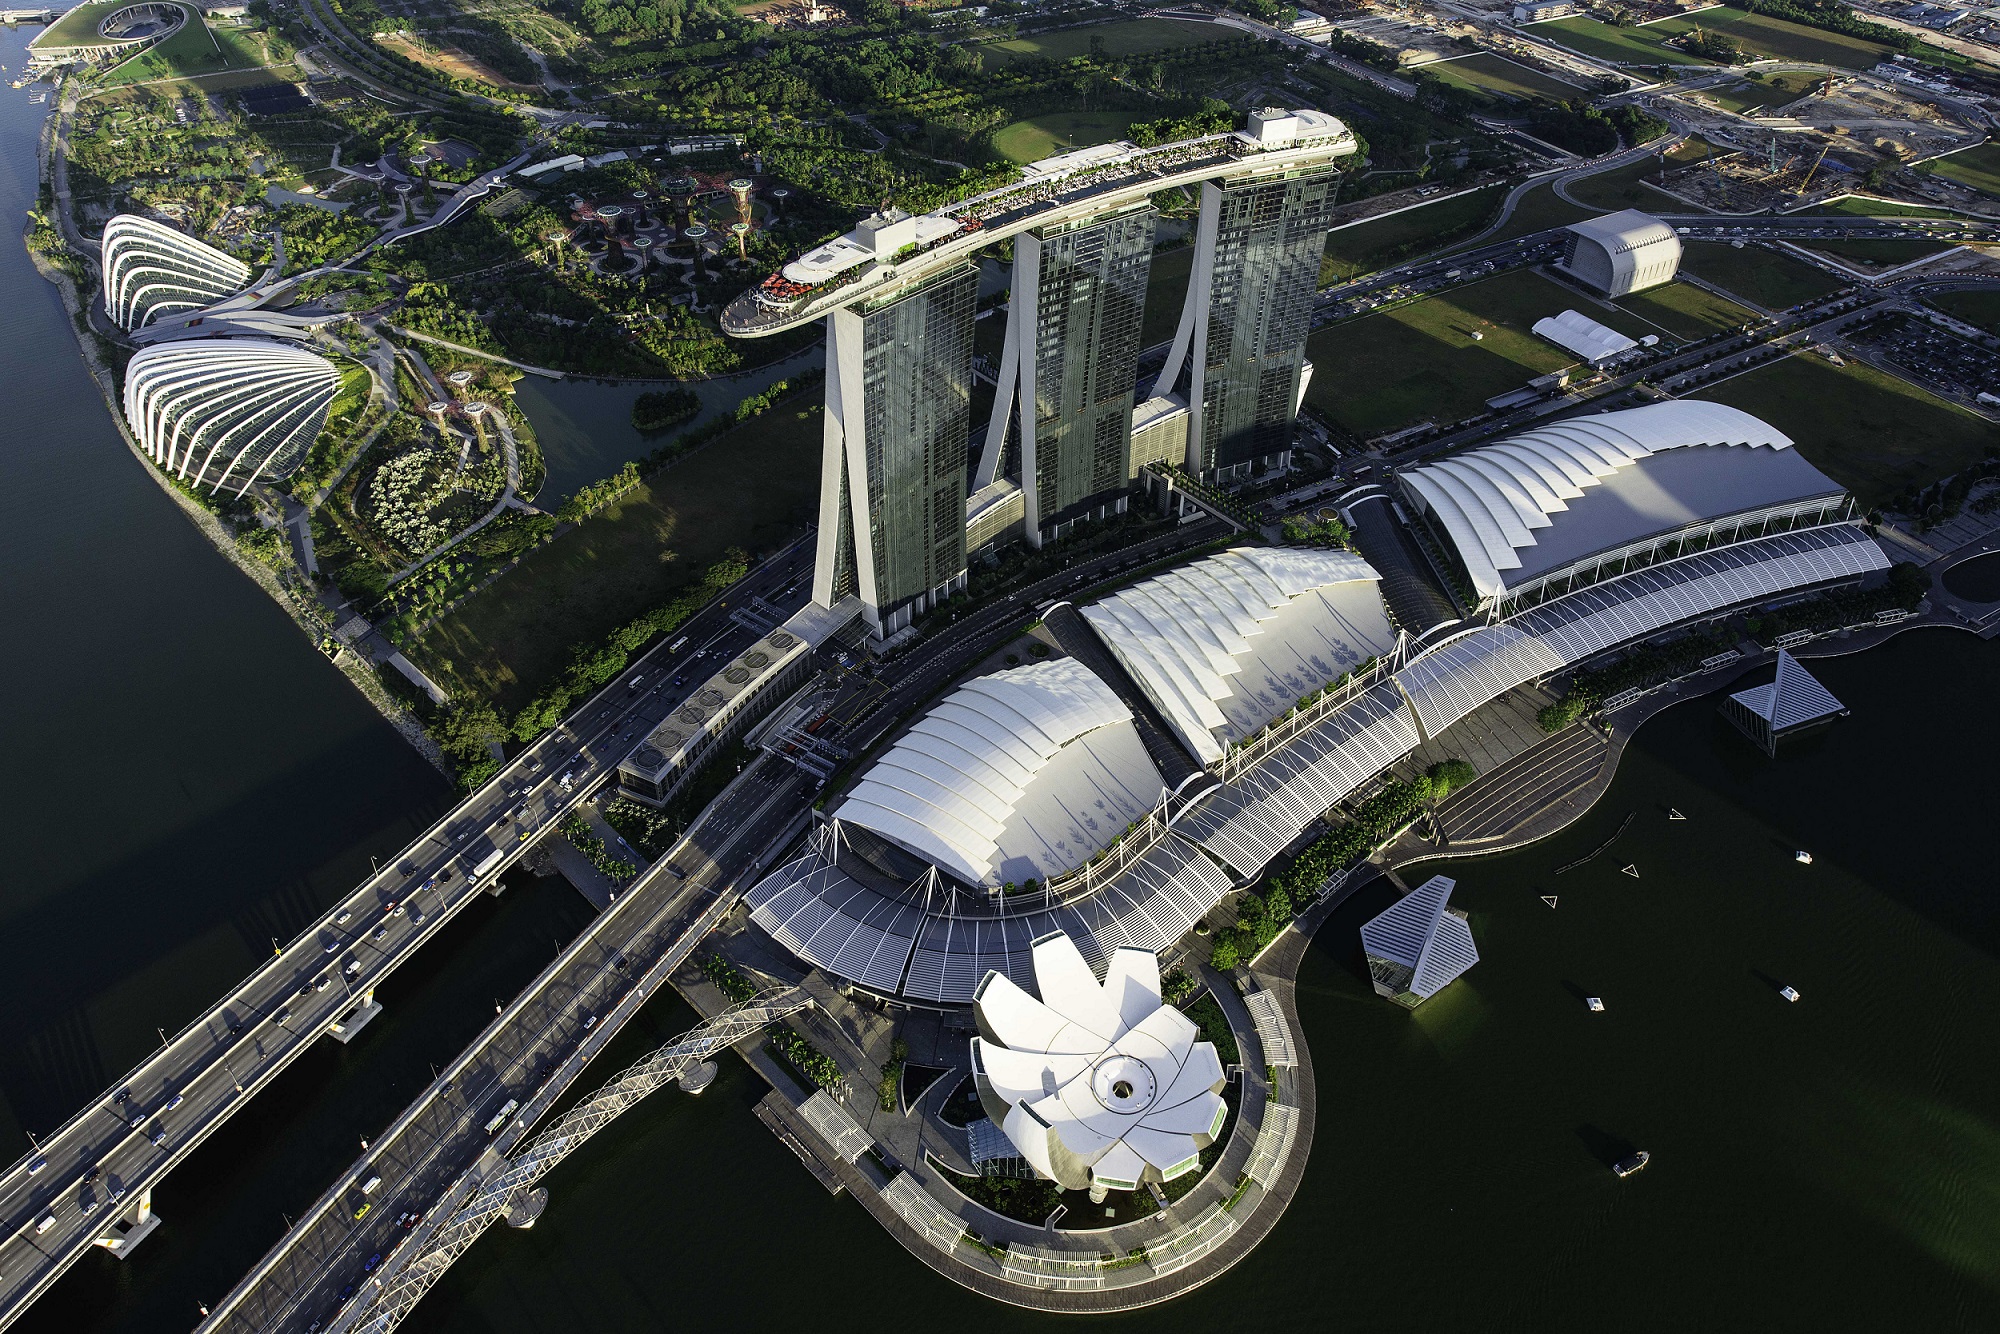 Marina Bay Sands ushers in a new era of luxury hospitality